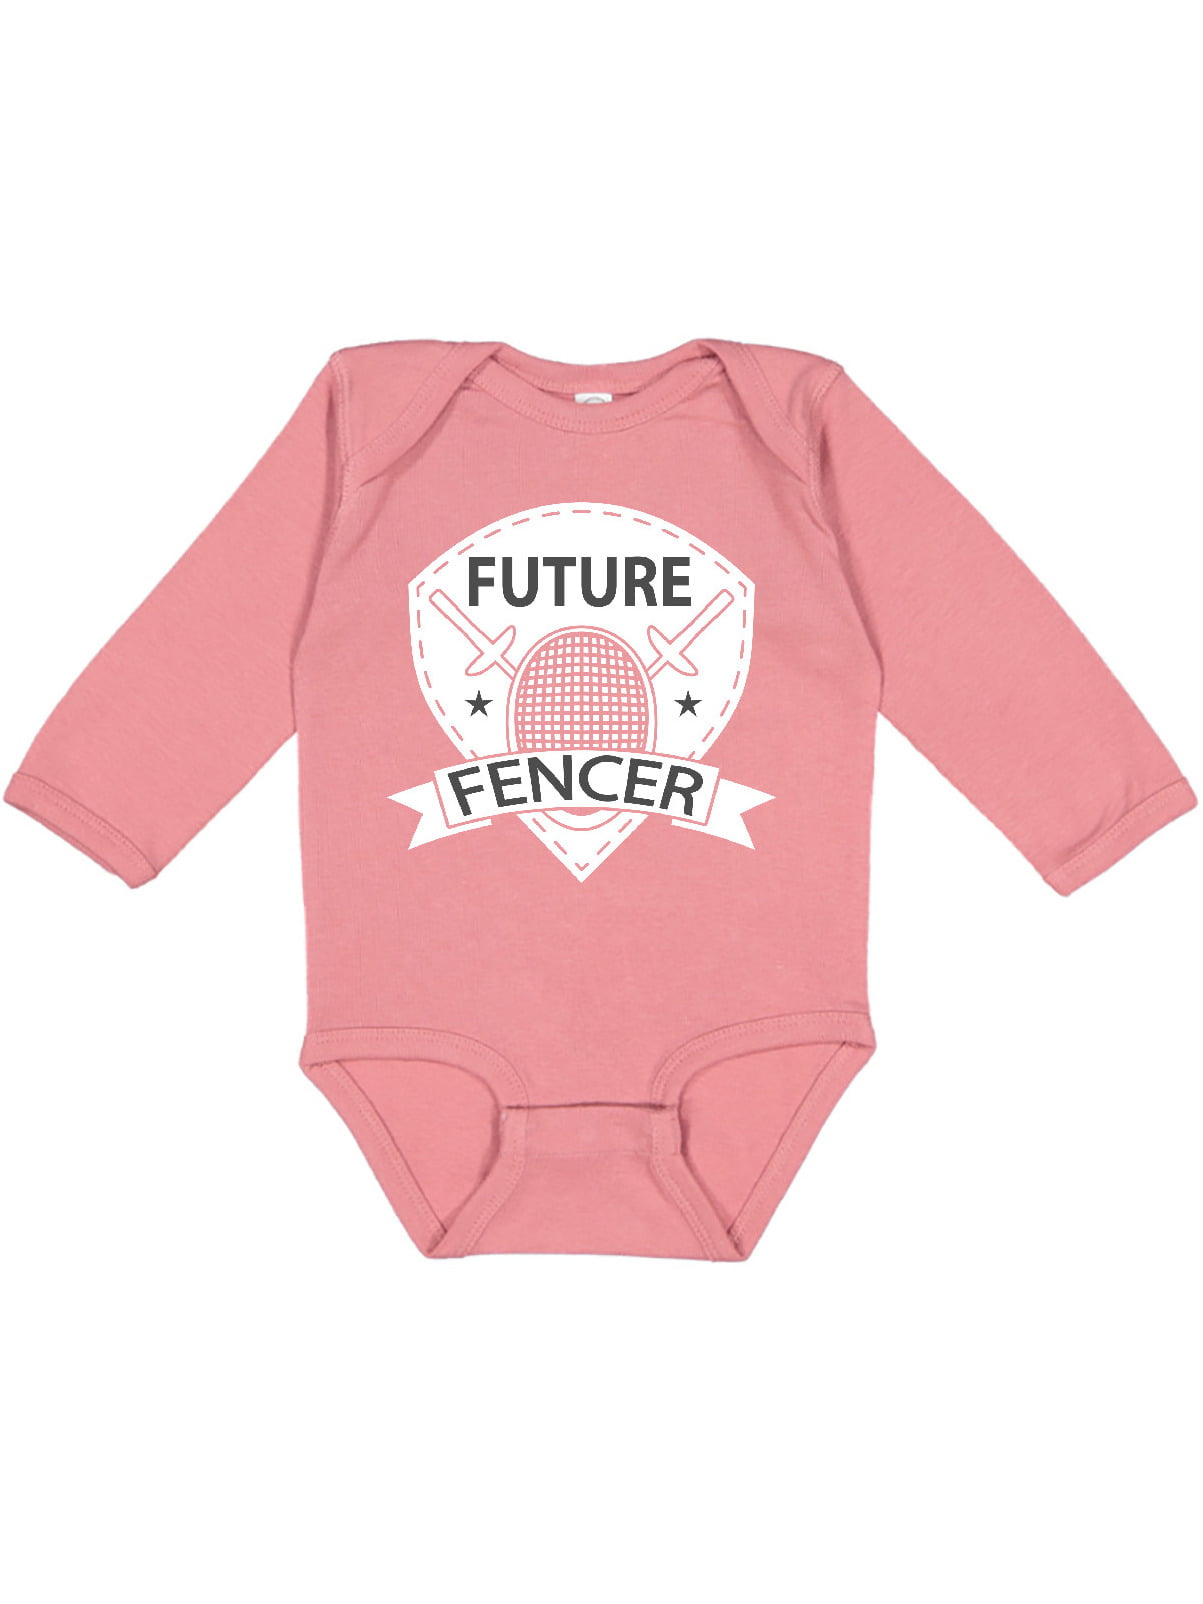 Future fencing buddy baby Gerber onesie bodysuit pick size 